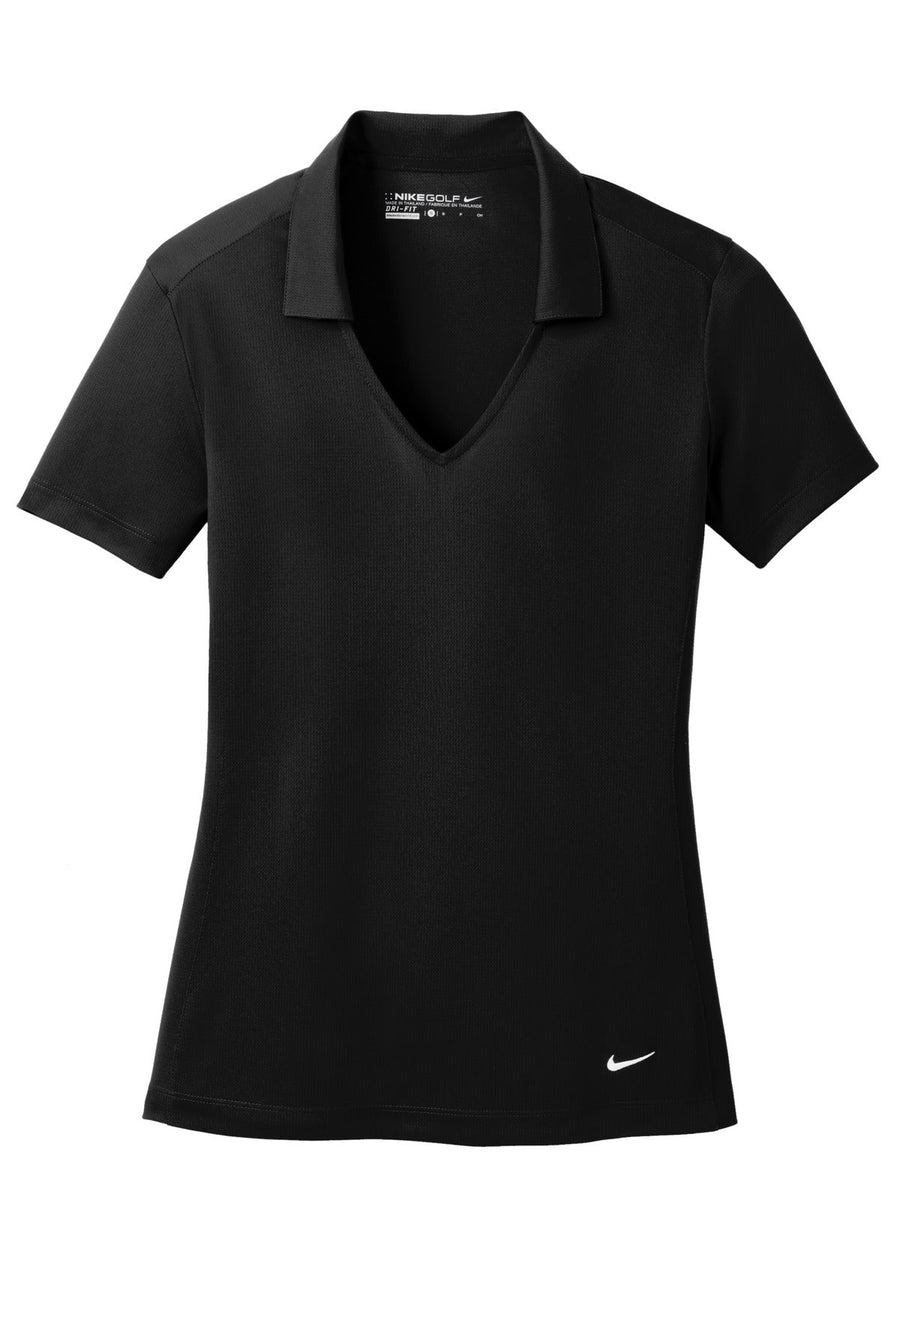 Nike Ladies Dri-FIT Vertical Mesh Polo